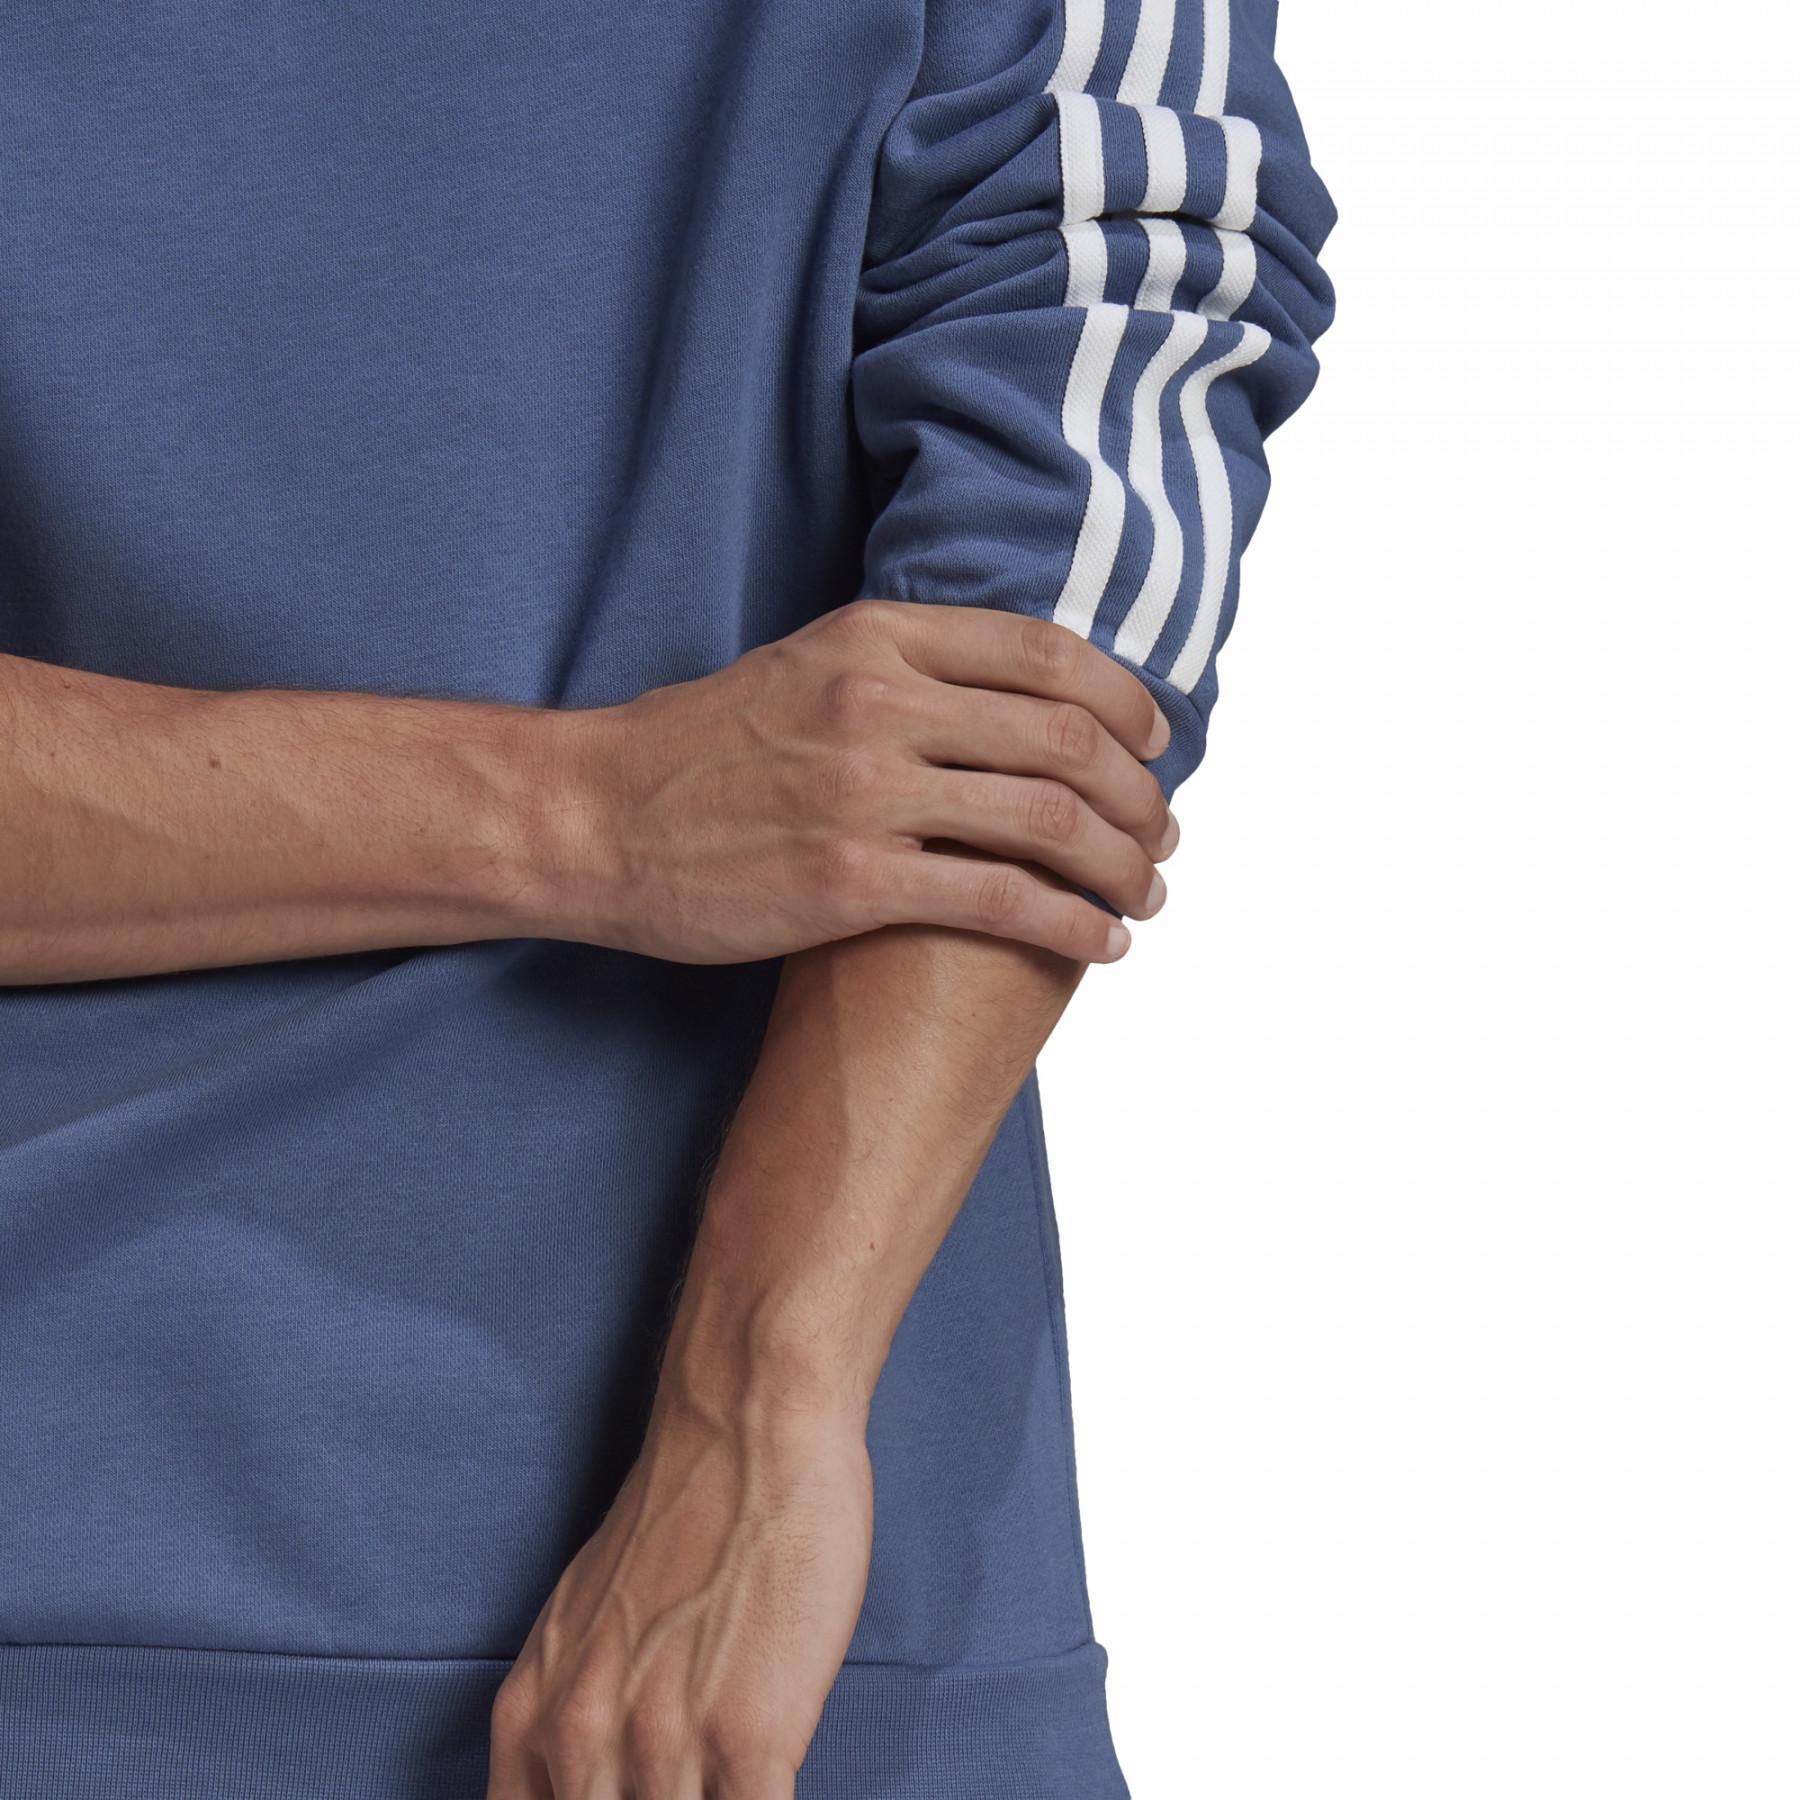 Bluza Adidas Crewneck 3-stripes